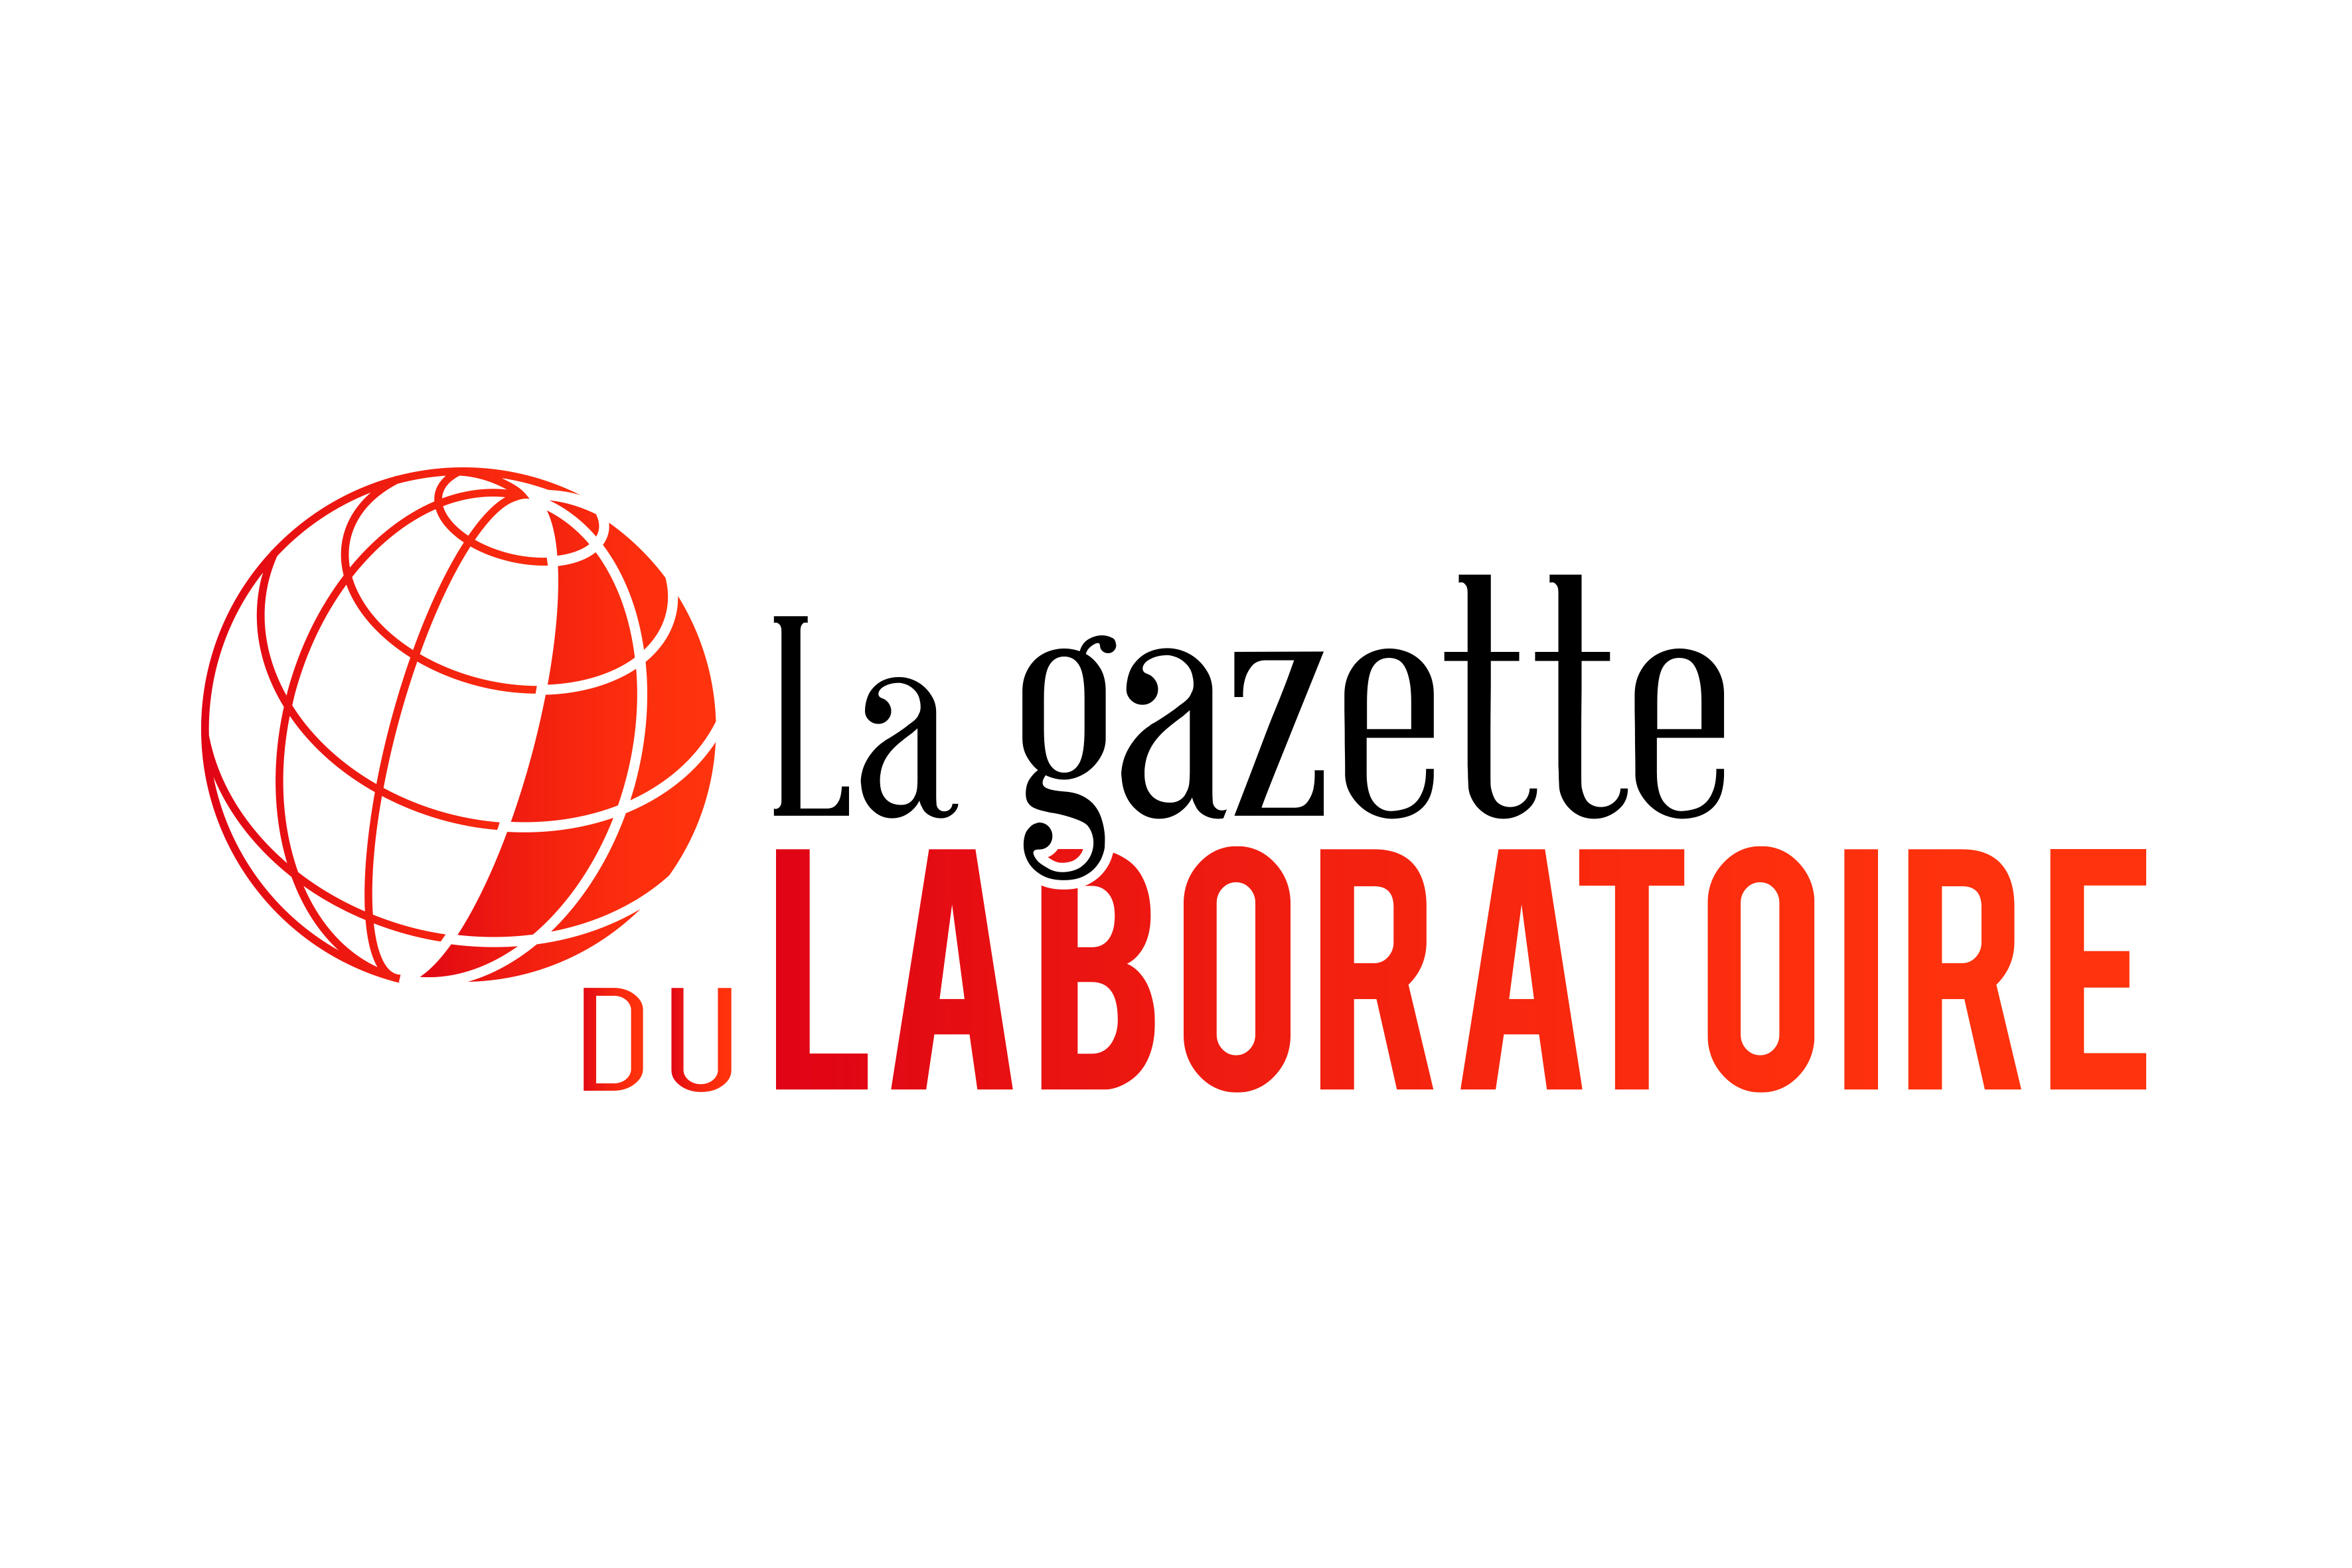 Gazette du laboratoire